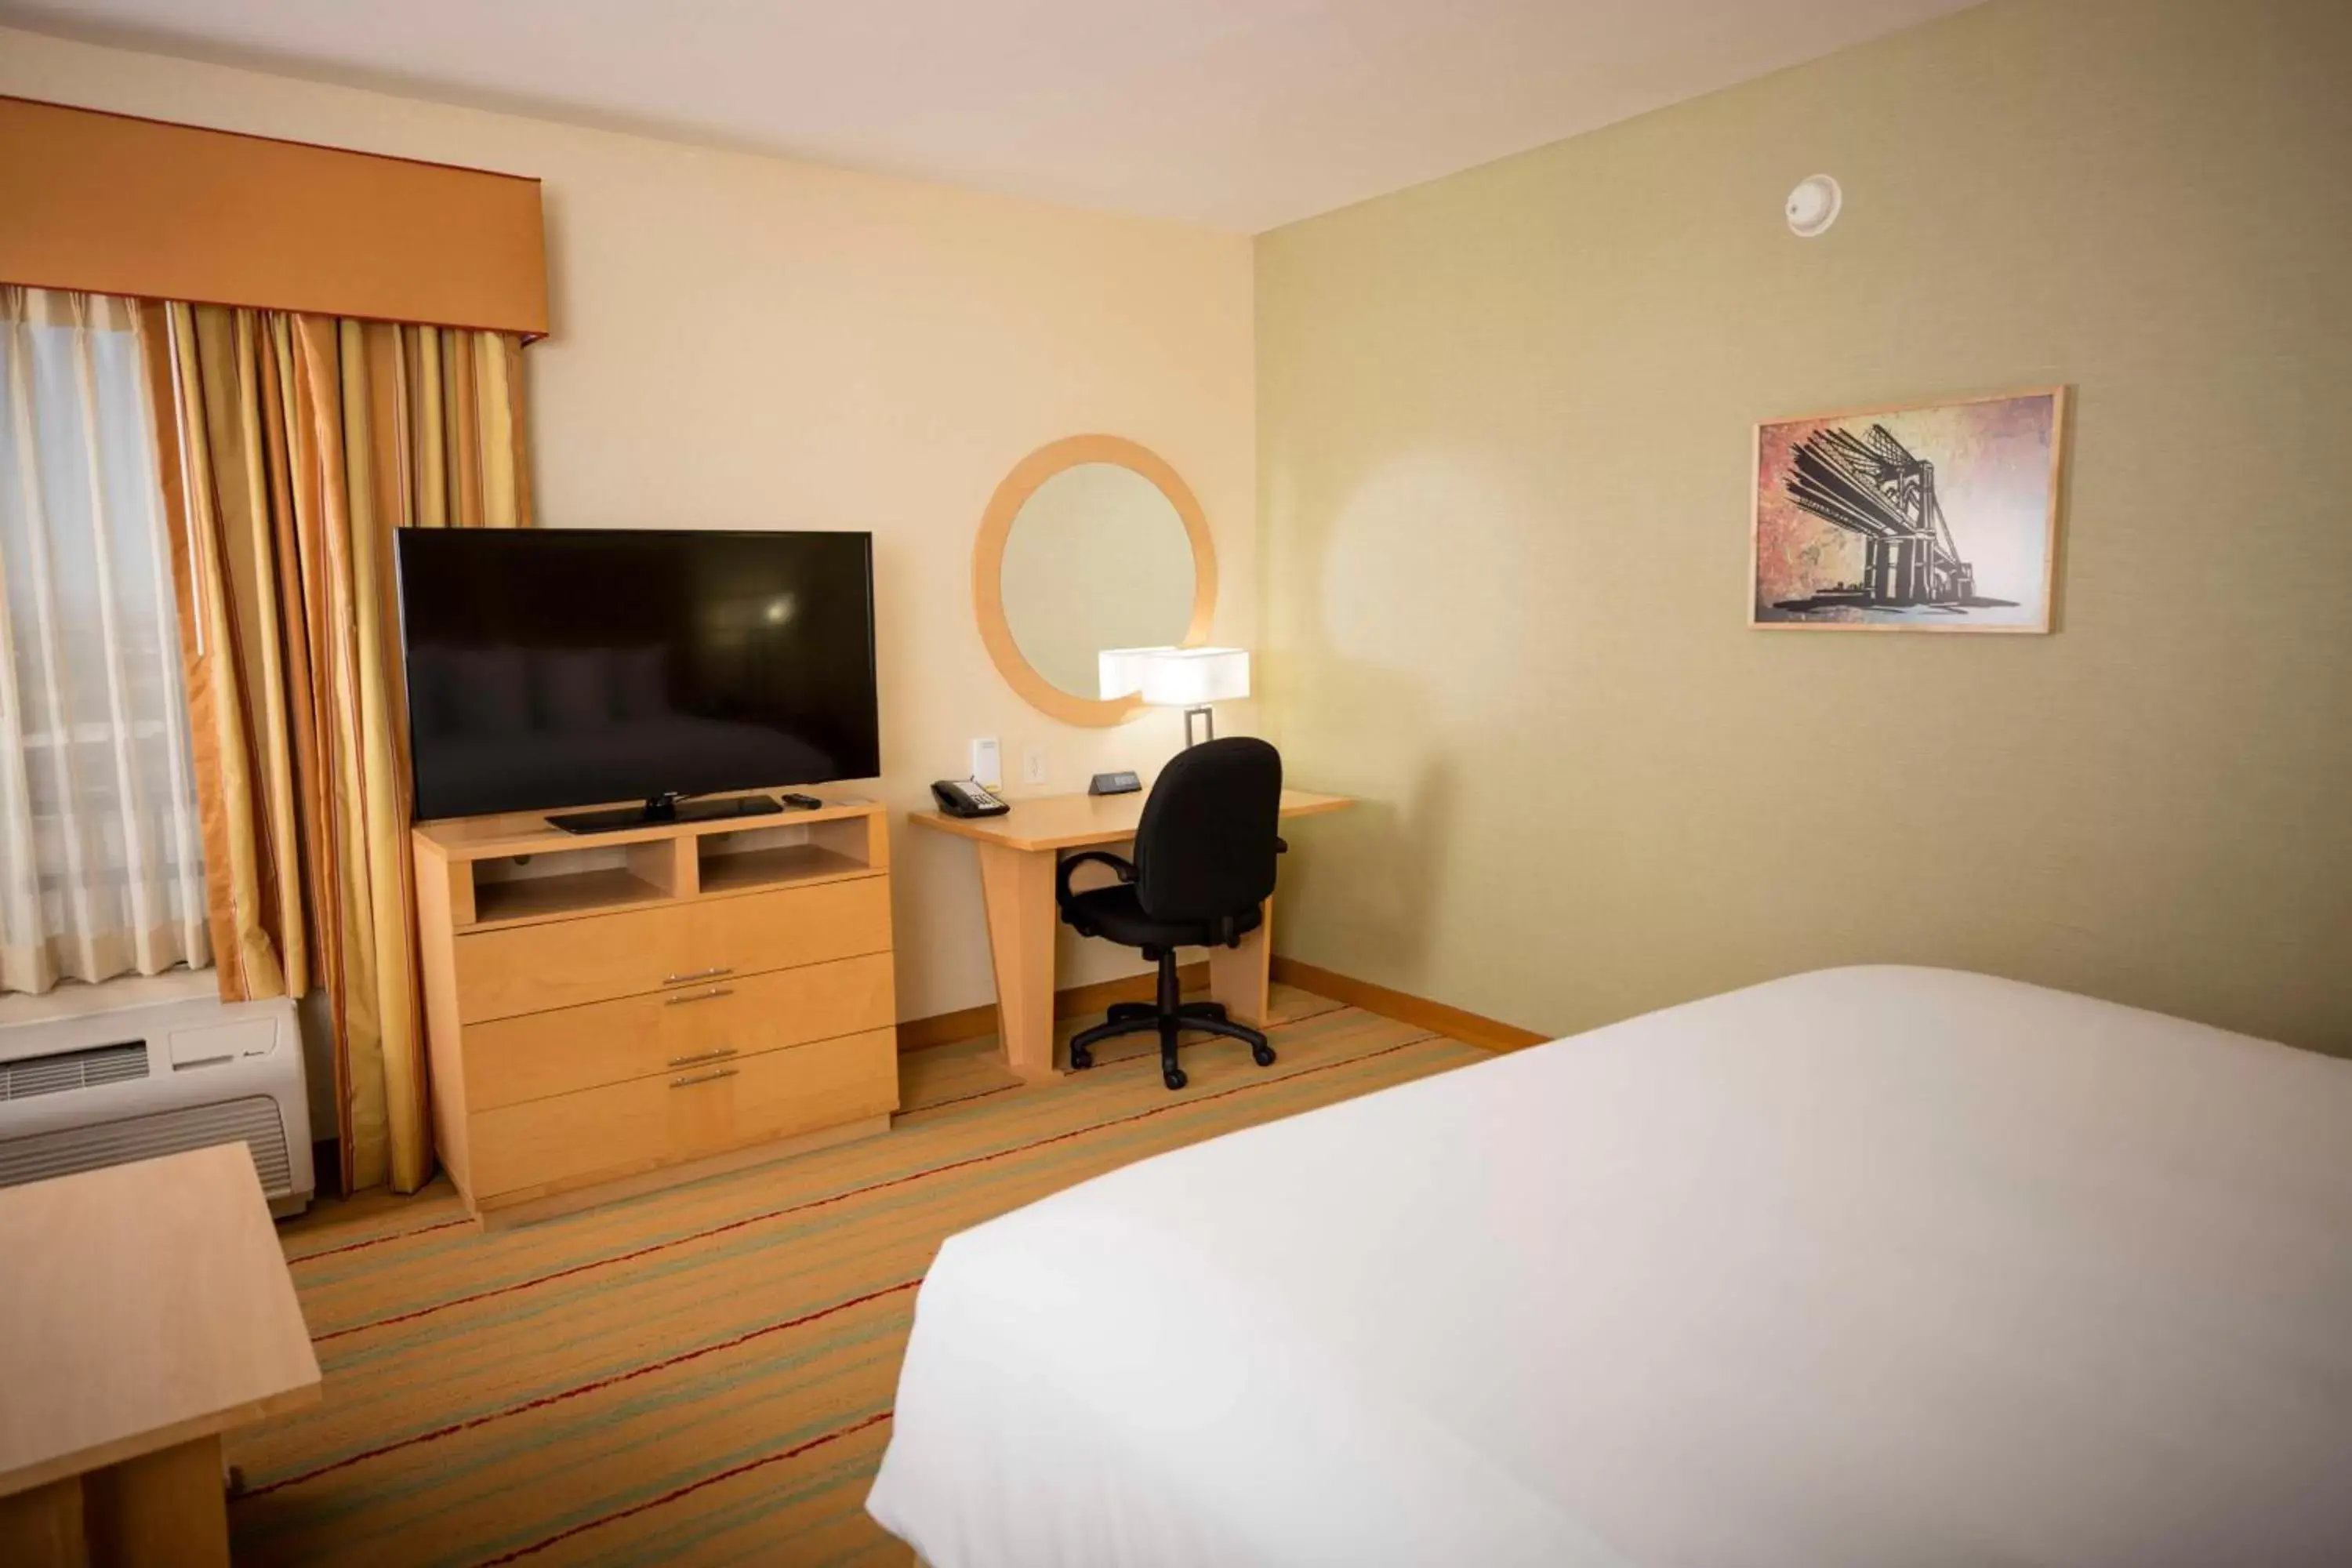 Bedroom, TV/Entertainment Center in Radisson Hotel Yuma